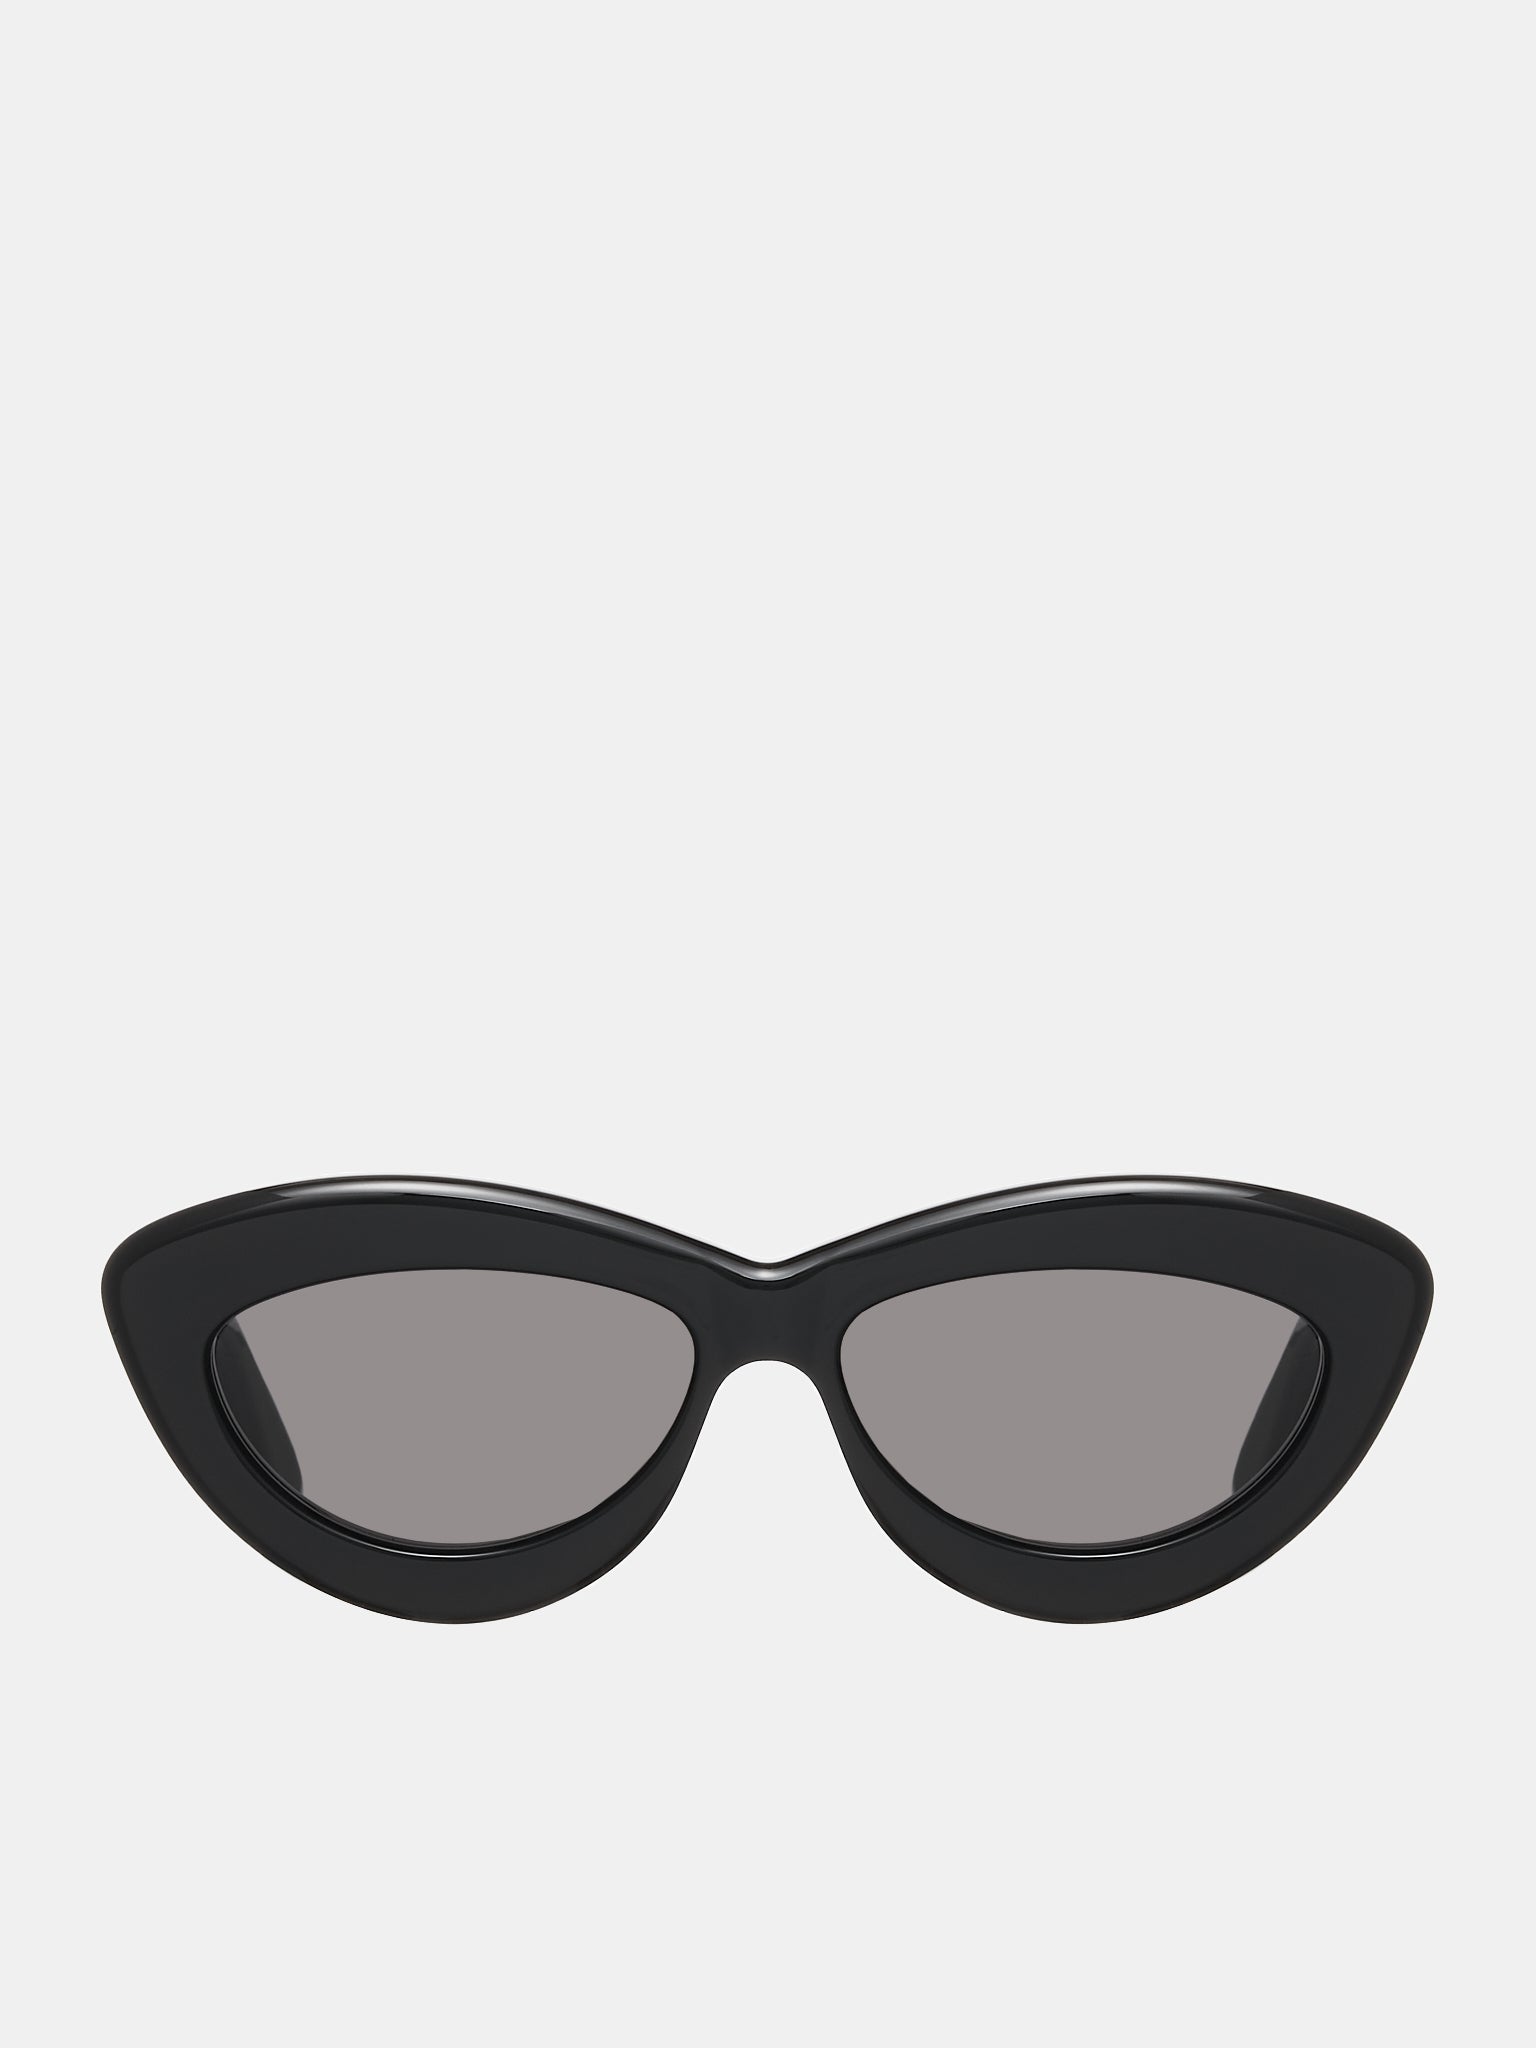 LOEWE Cateye Sunglasses | H. Lorenzo - front